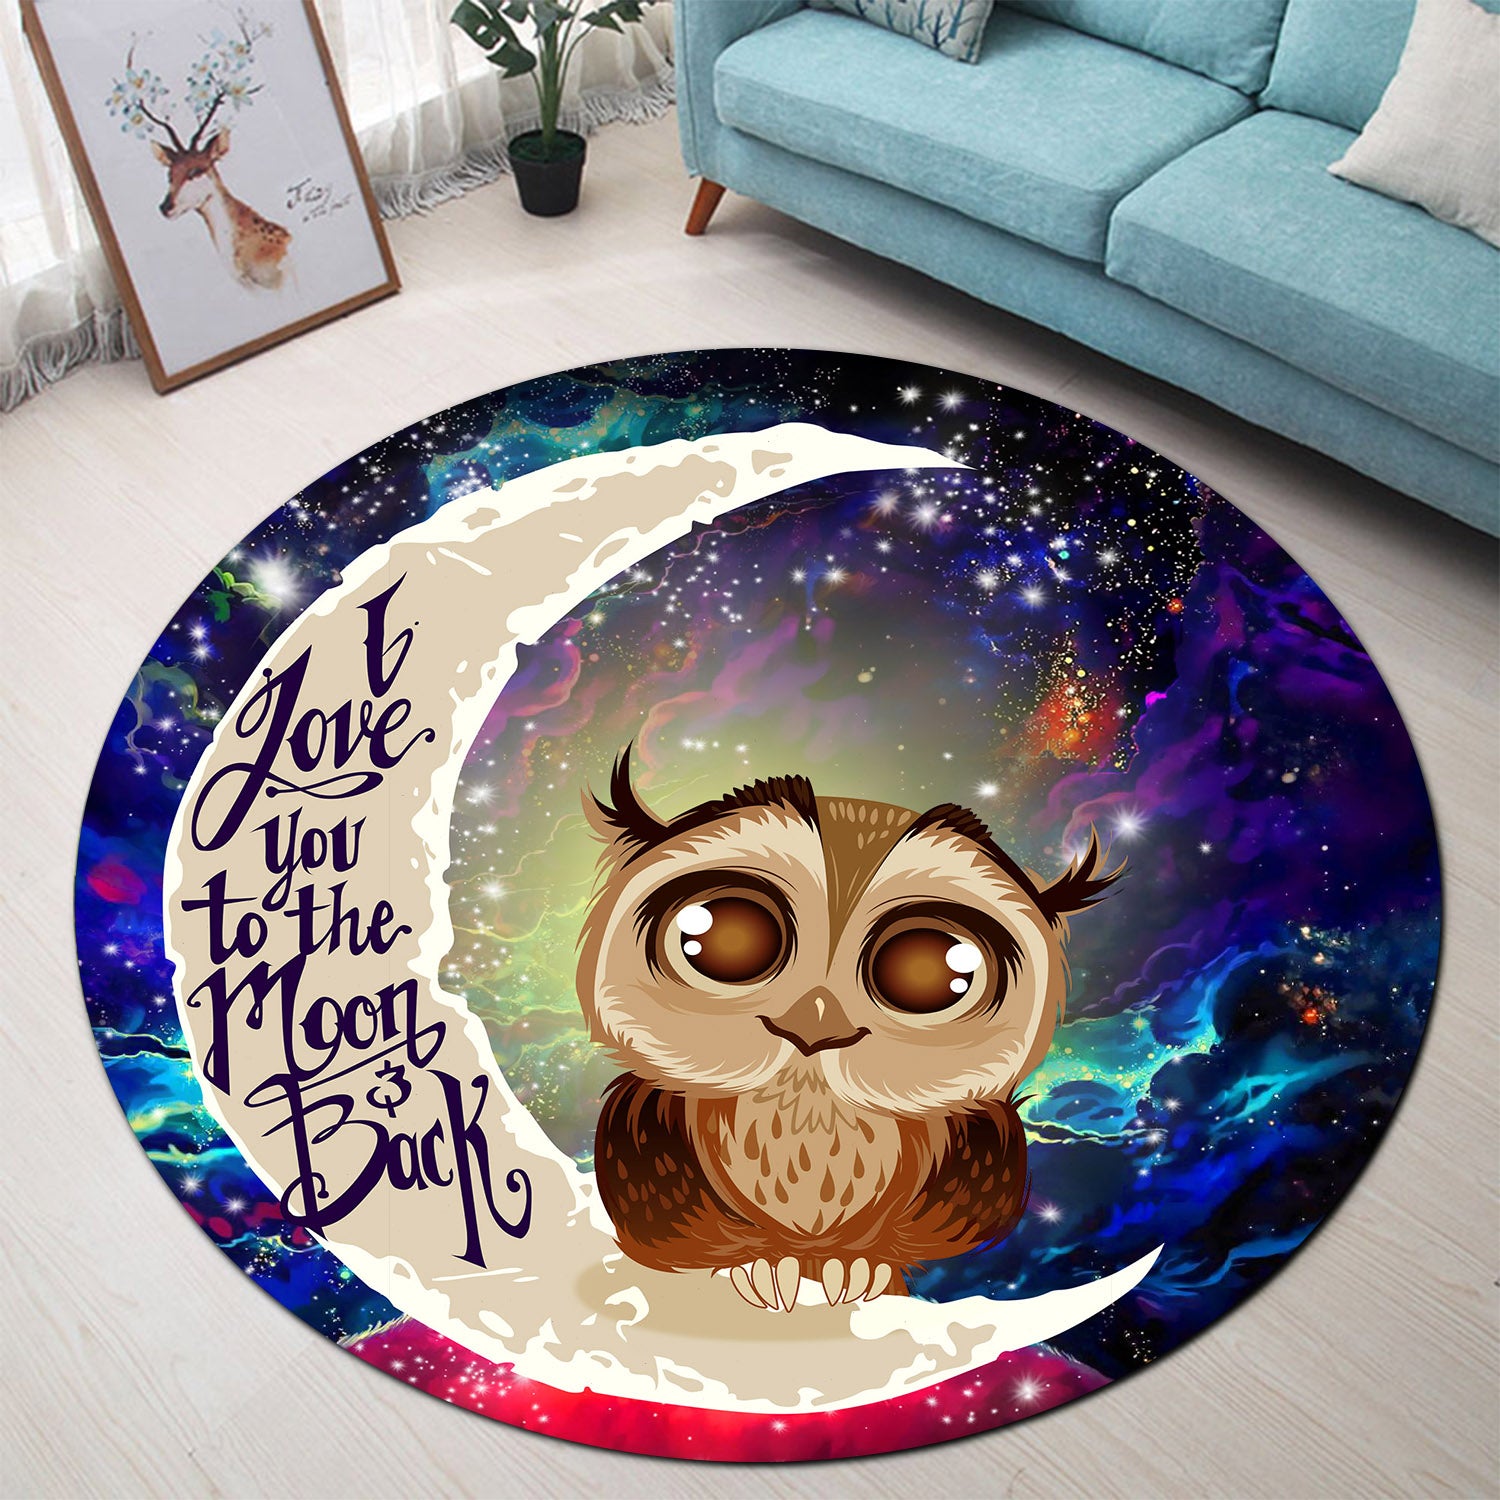 Cute Owl Love You To The Moon Galaxy Round Carpet Rug Bedroom Livingroom Home Decor Nearkii